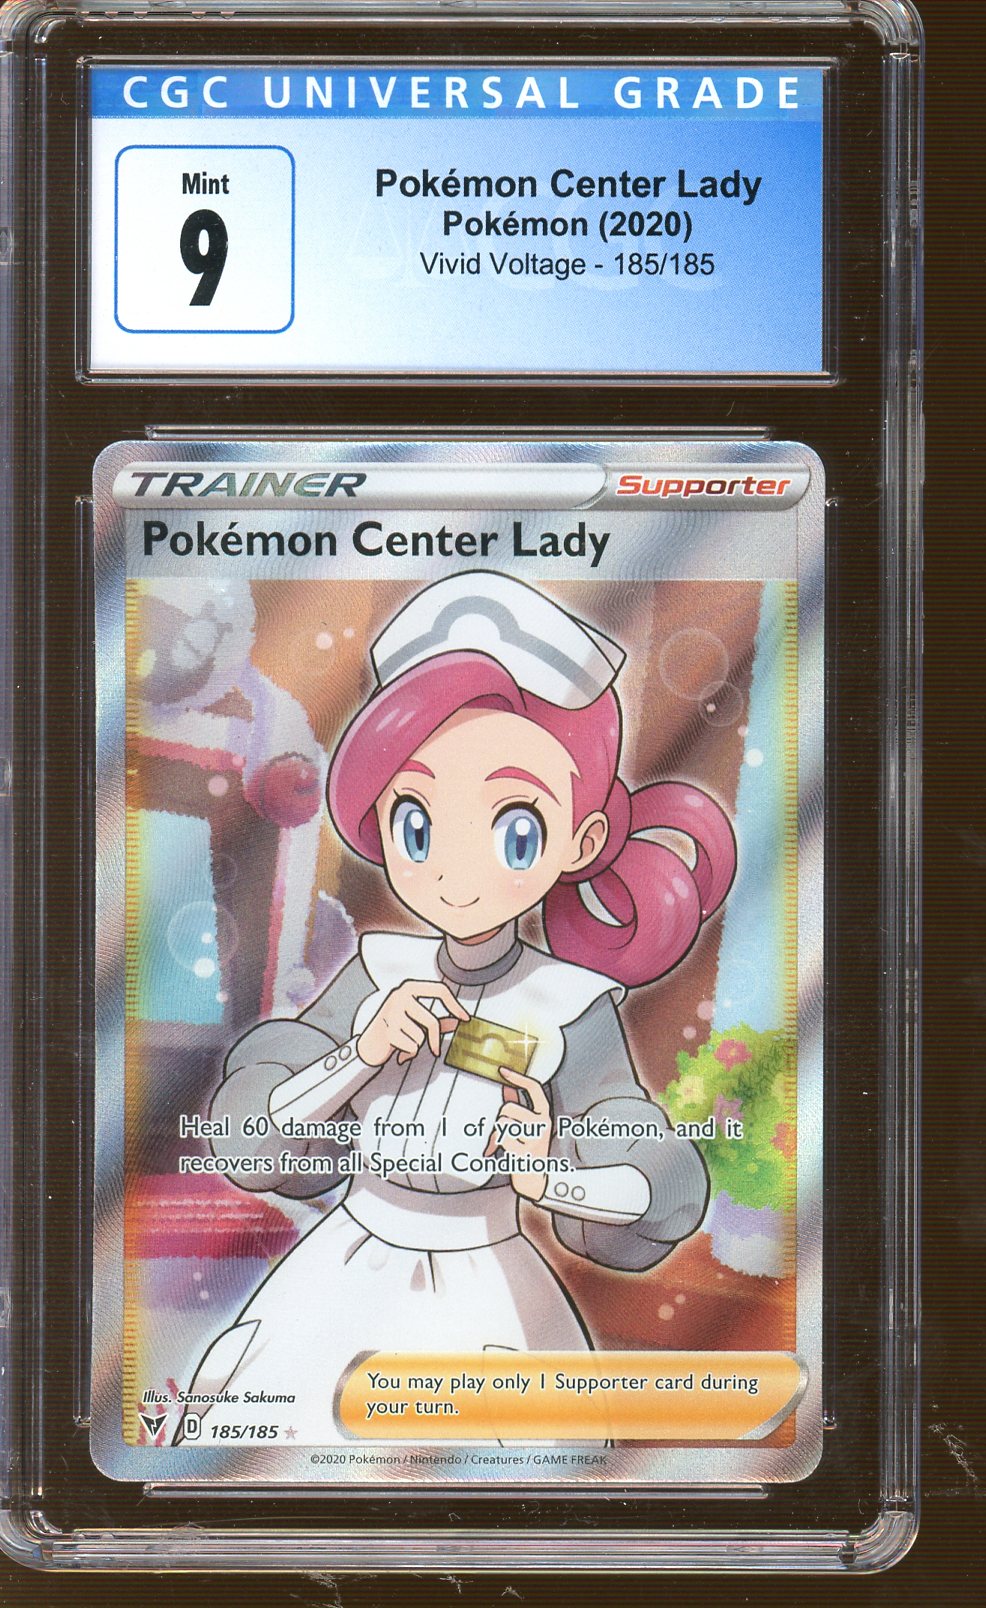 CGC Mint 9 - 2020 Pokémon - Vivid Voltage - Pokemon Center Lady